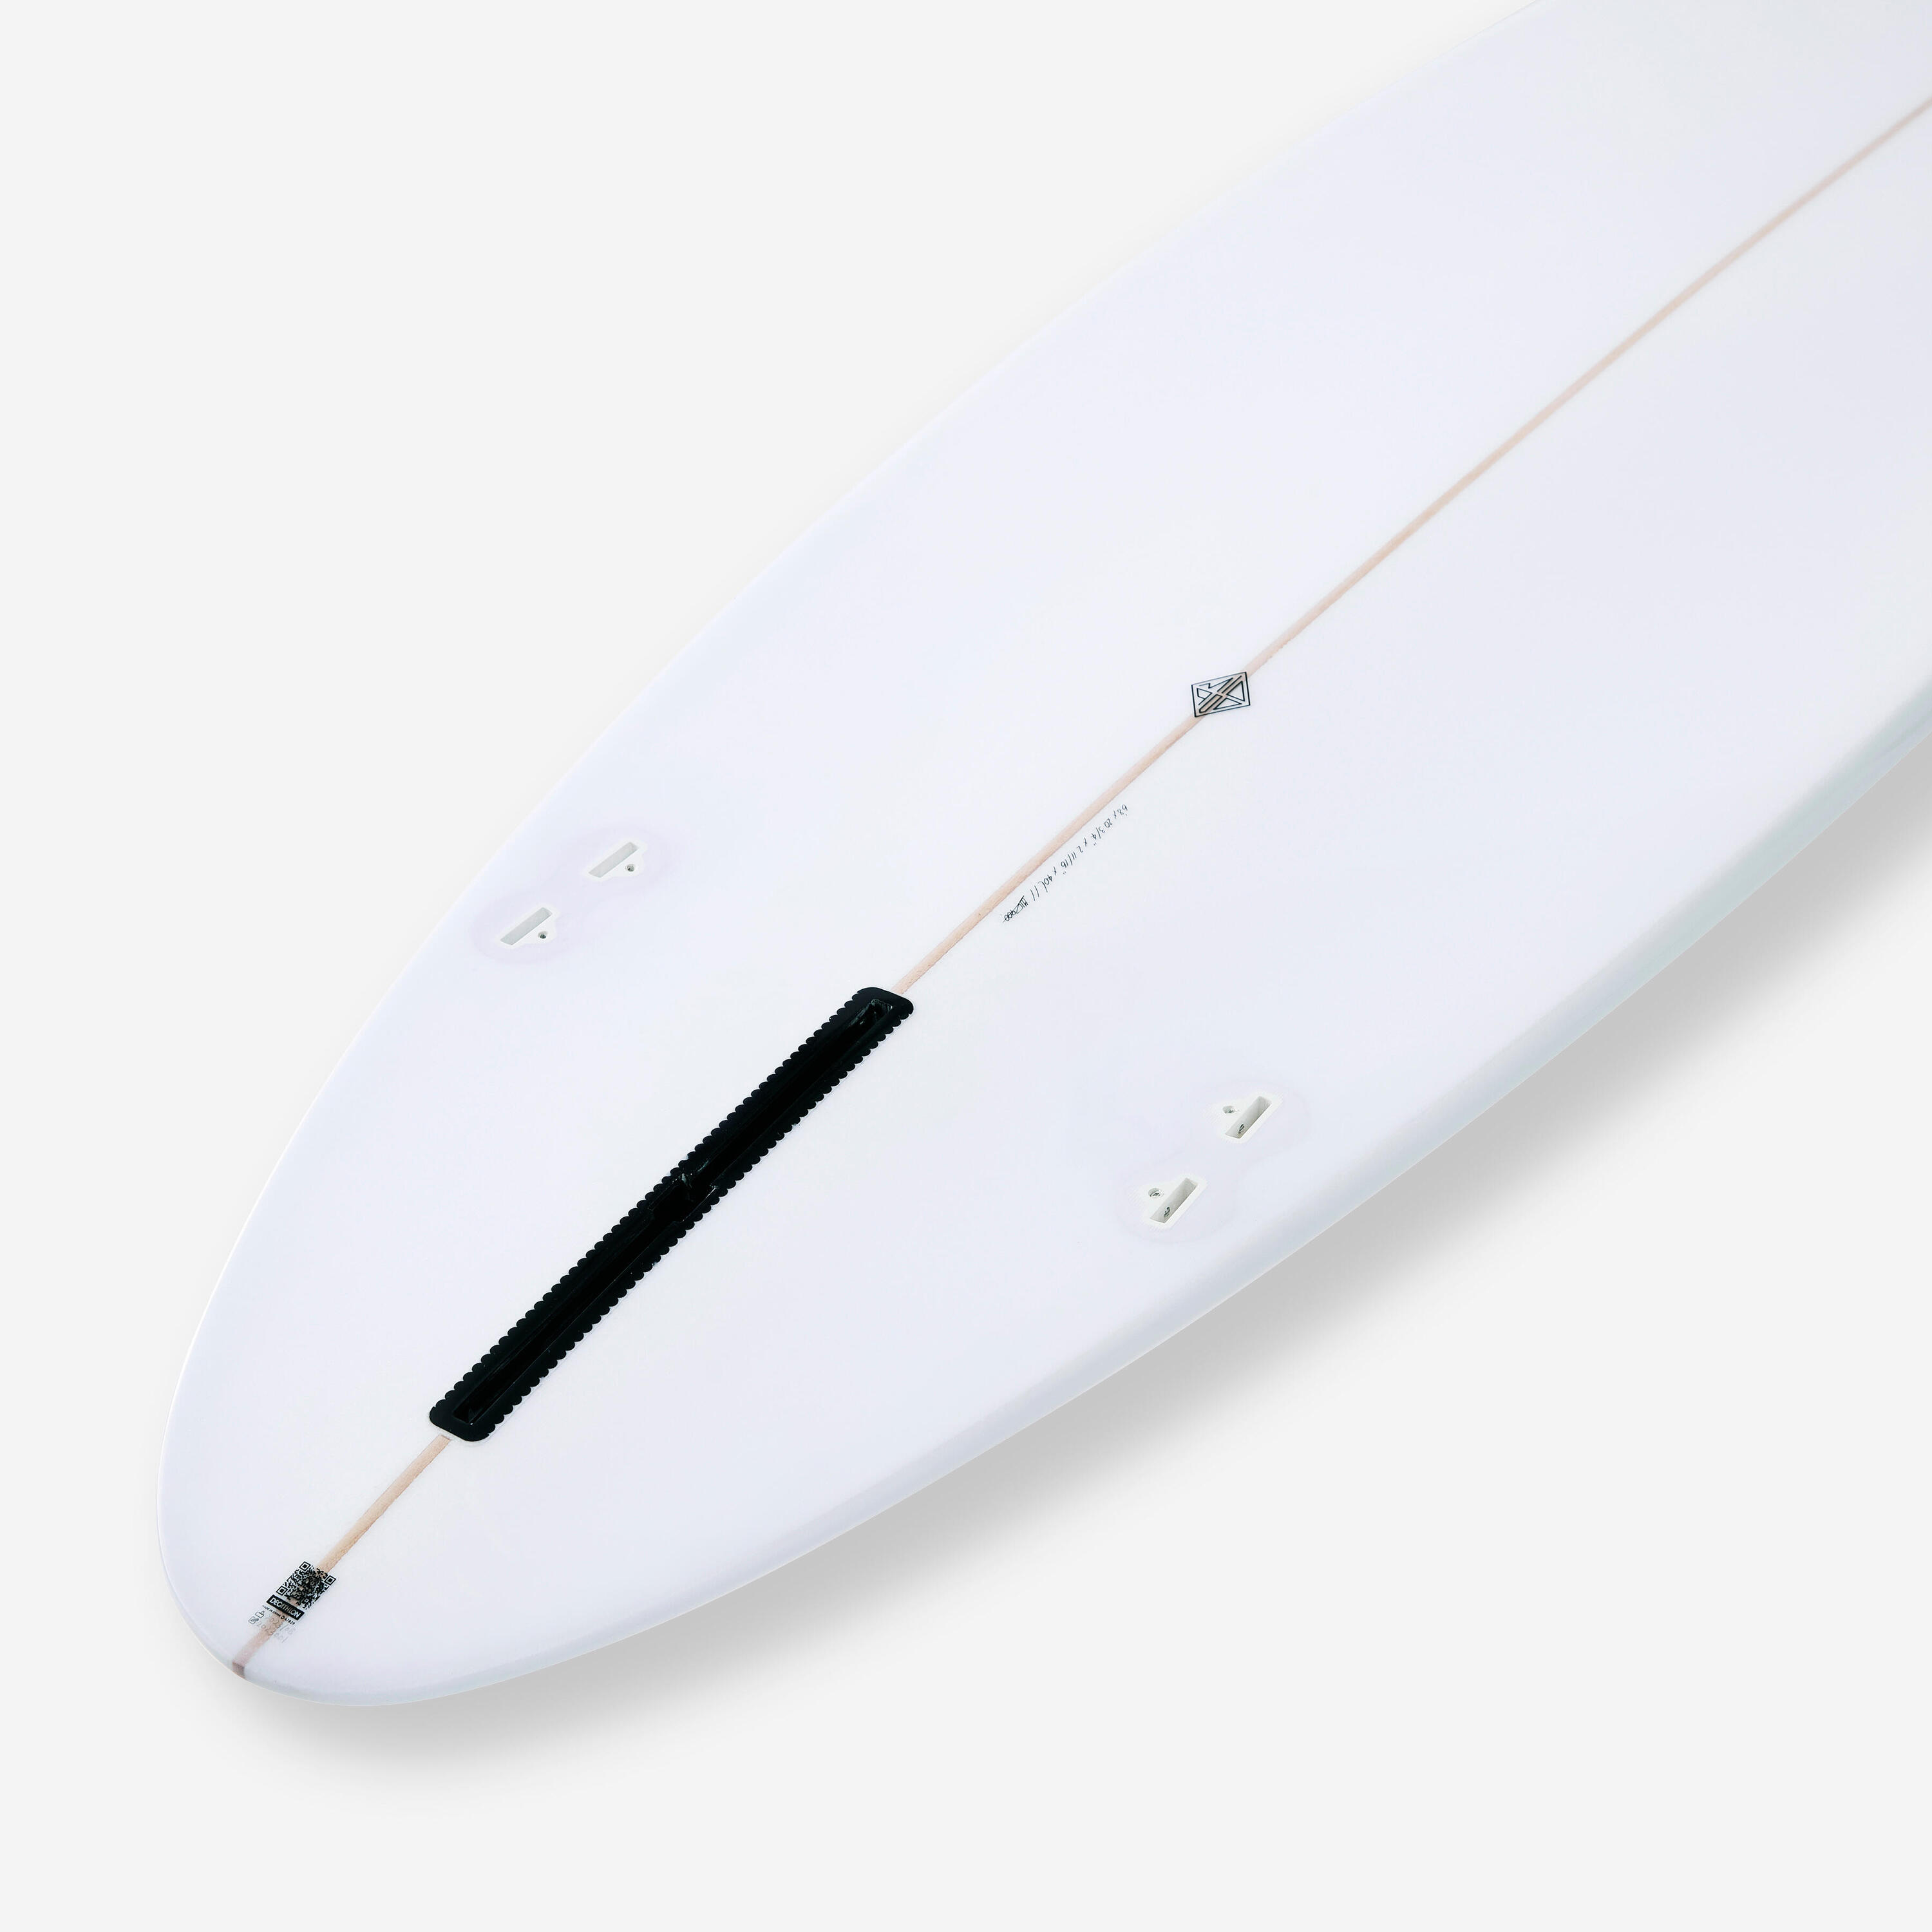 Surfboard 7'4" - 900 mid-length white 4/10